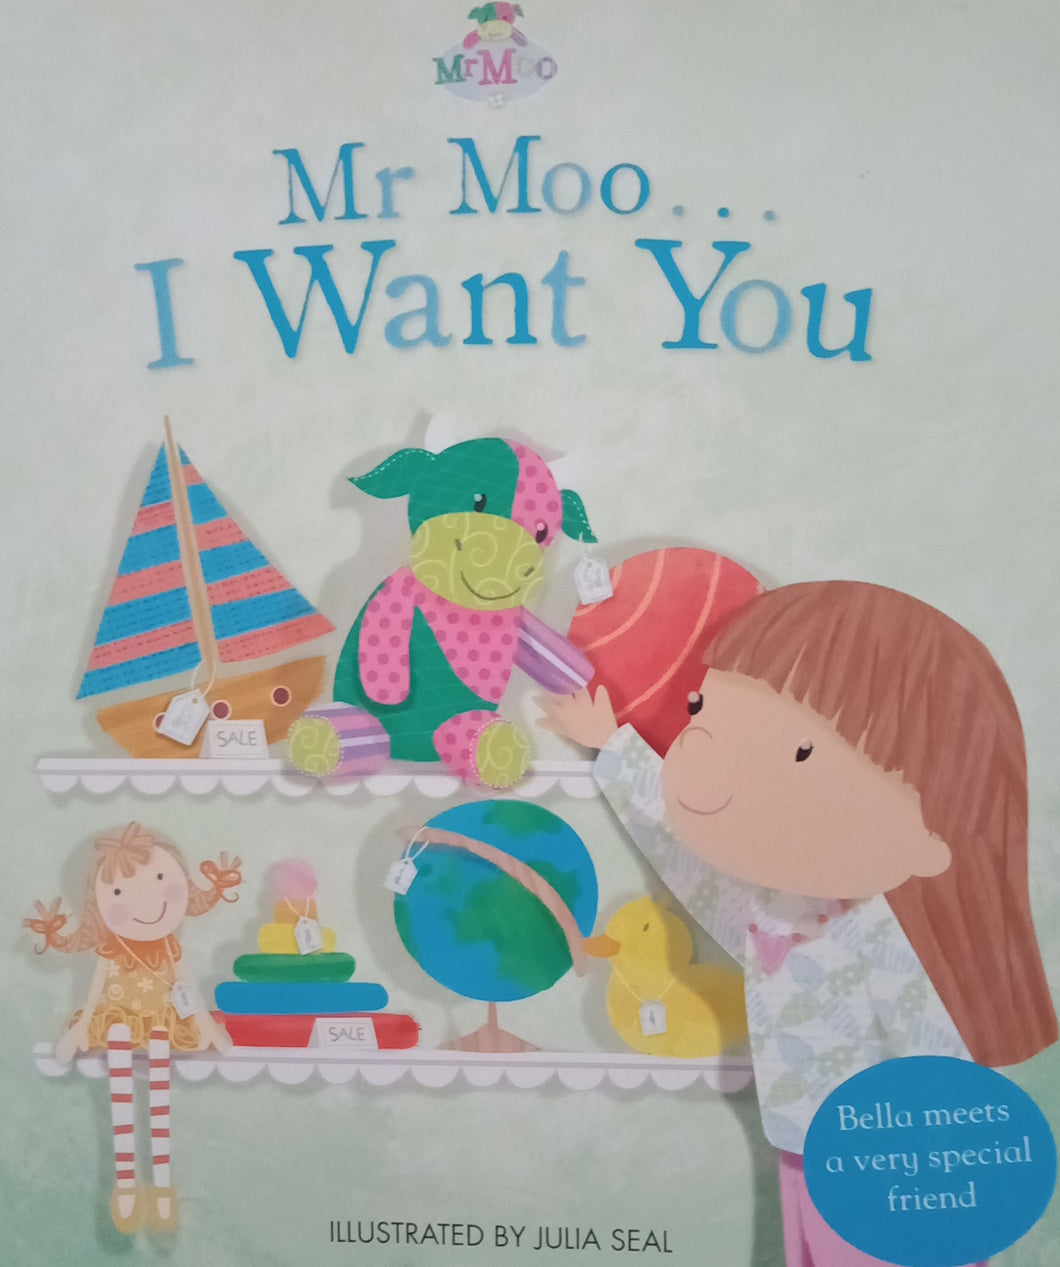 Mr. Moo... I Want You by Julia Seal